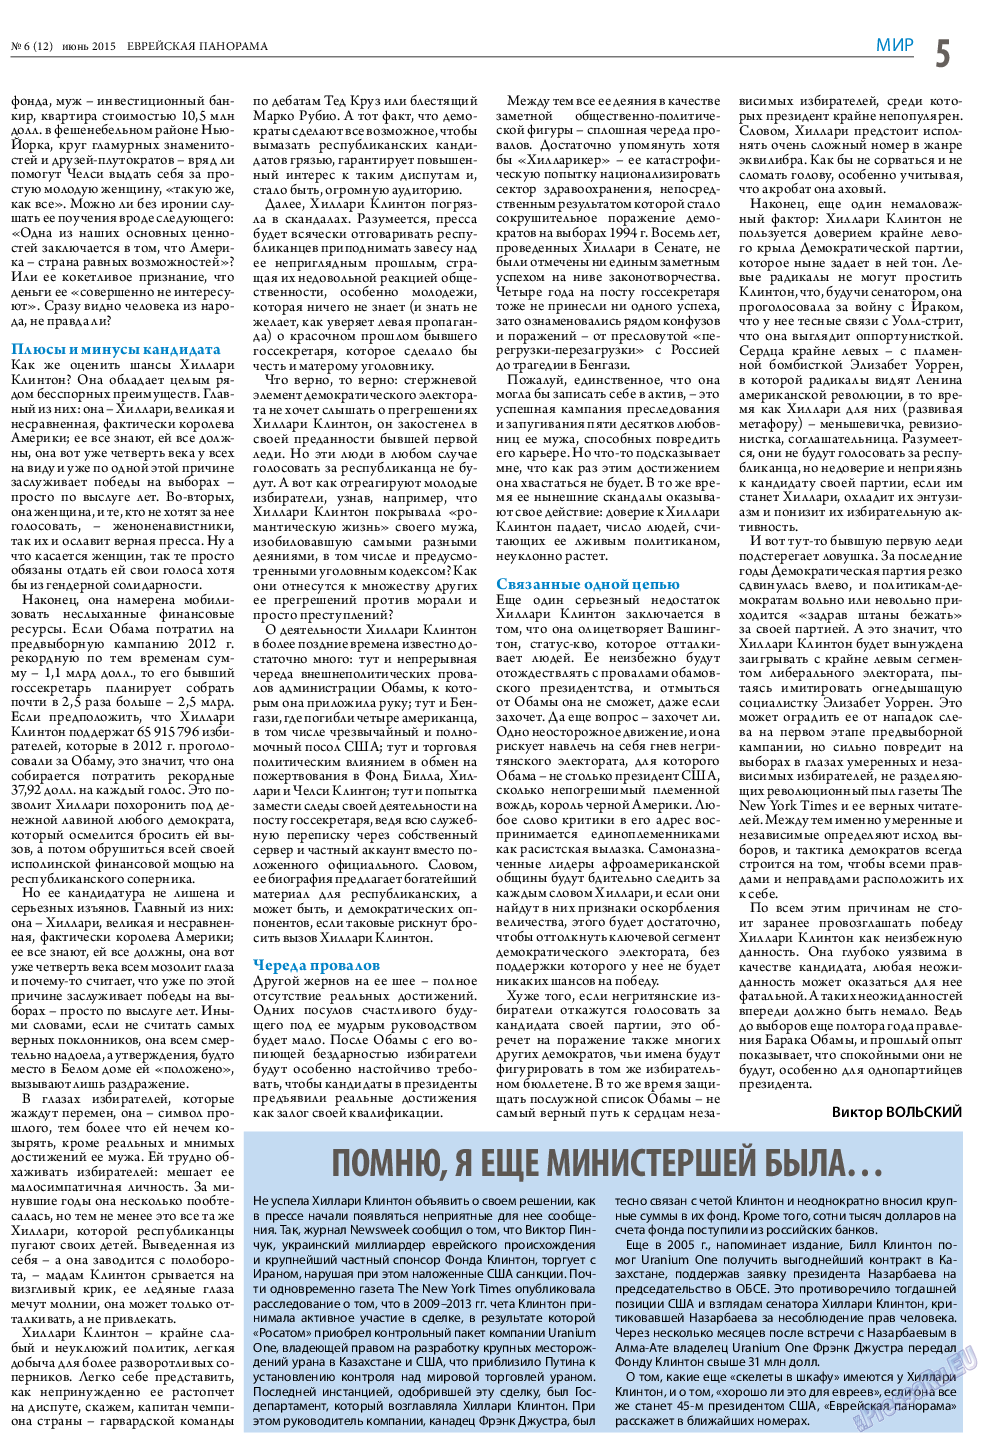 Еврейская панорама, газета. 2015 №6 стр.5